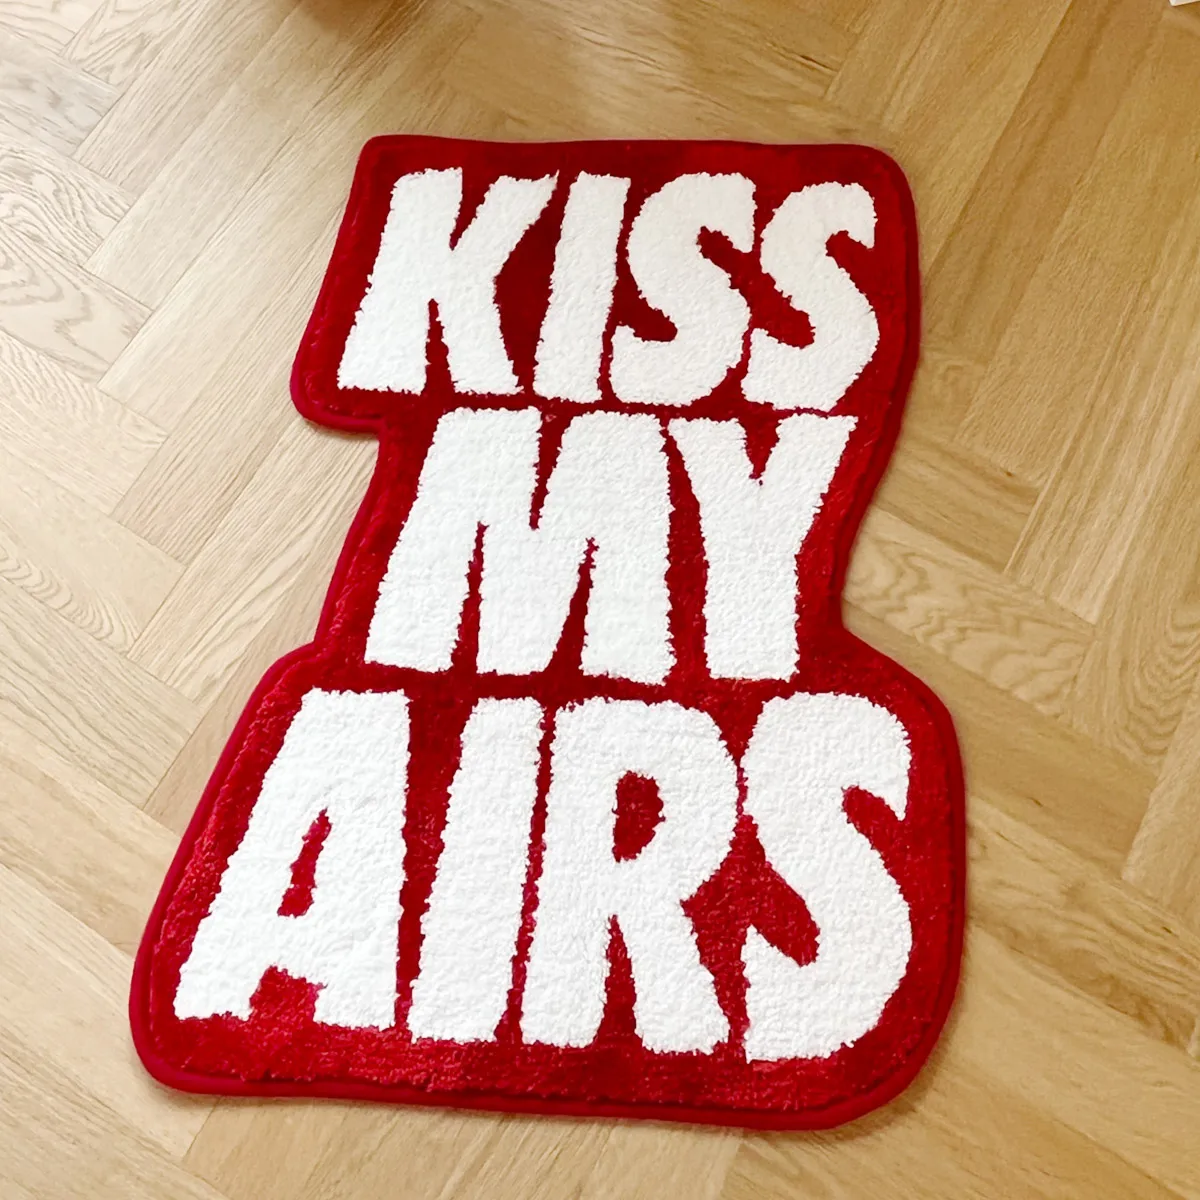 Kiss My Airs Handmade Rug Tufted Plush Carpet Rug Purely Handmade Soft Suitable for Room Decor Fluffy Carpets Bedroom Bathroom